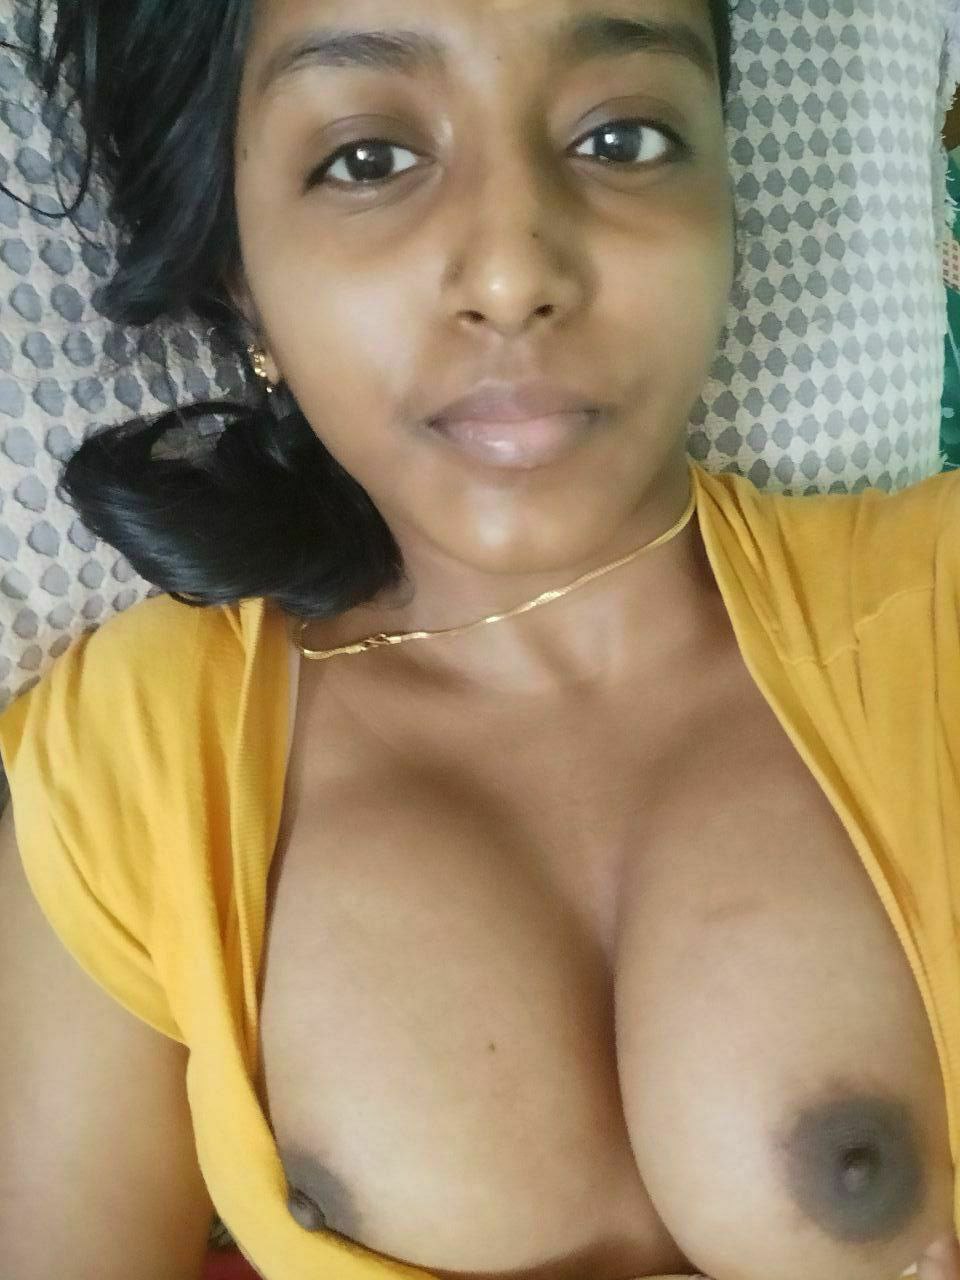 Kerala College Sex Photo - Kerala teen girl final part (22 pictures) - Shooshtime